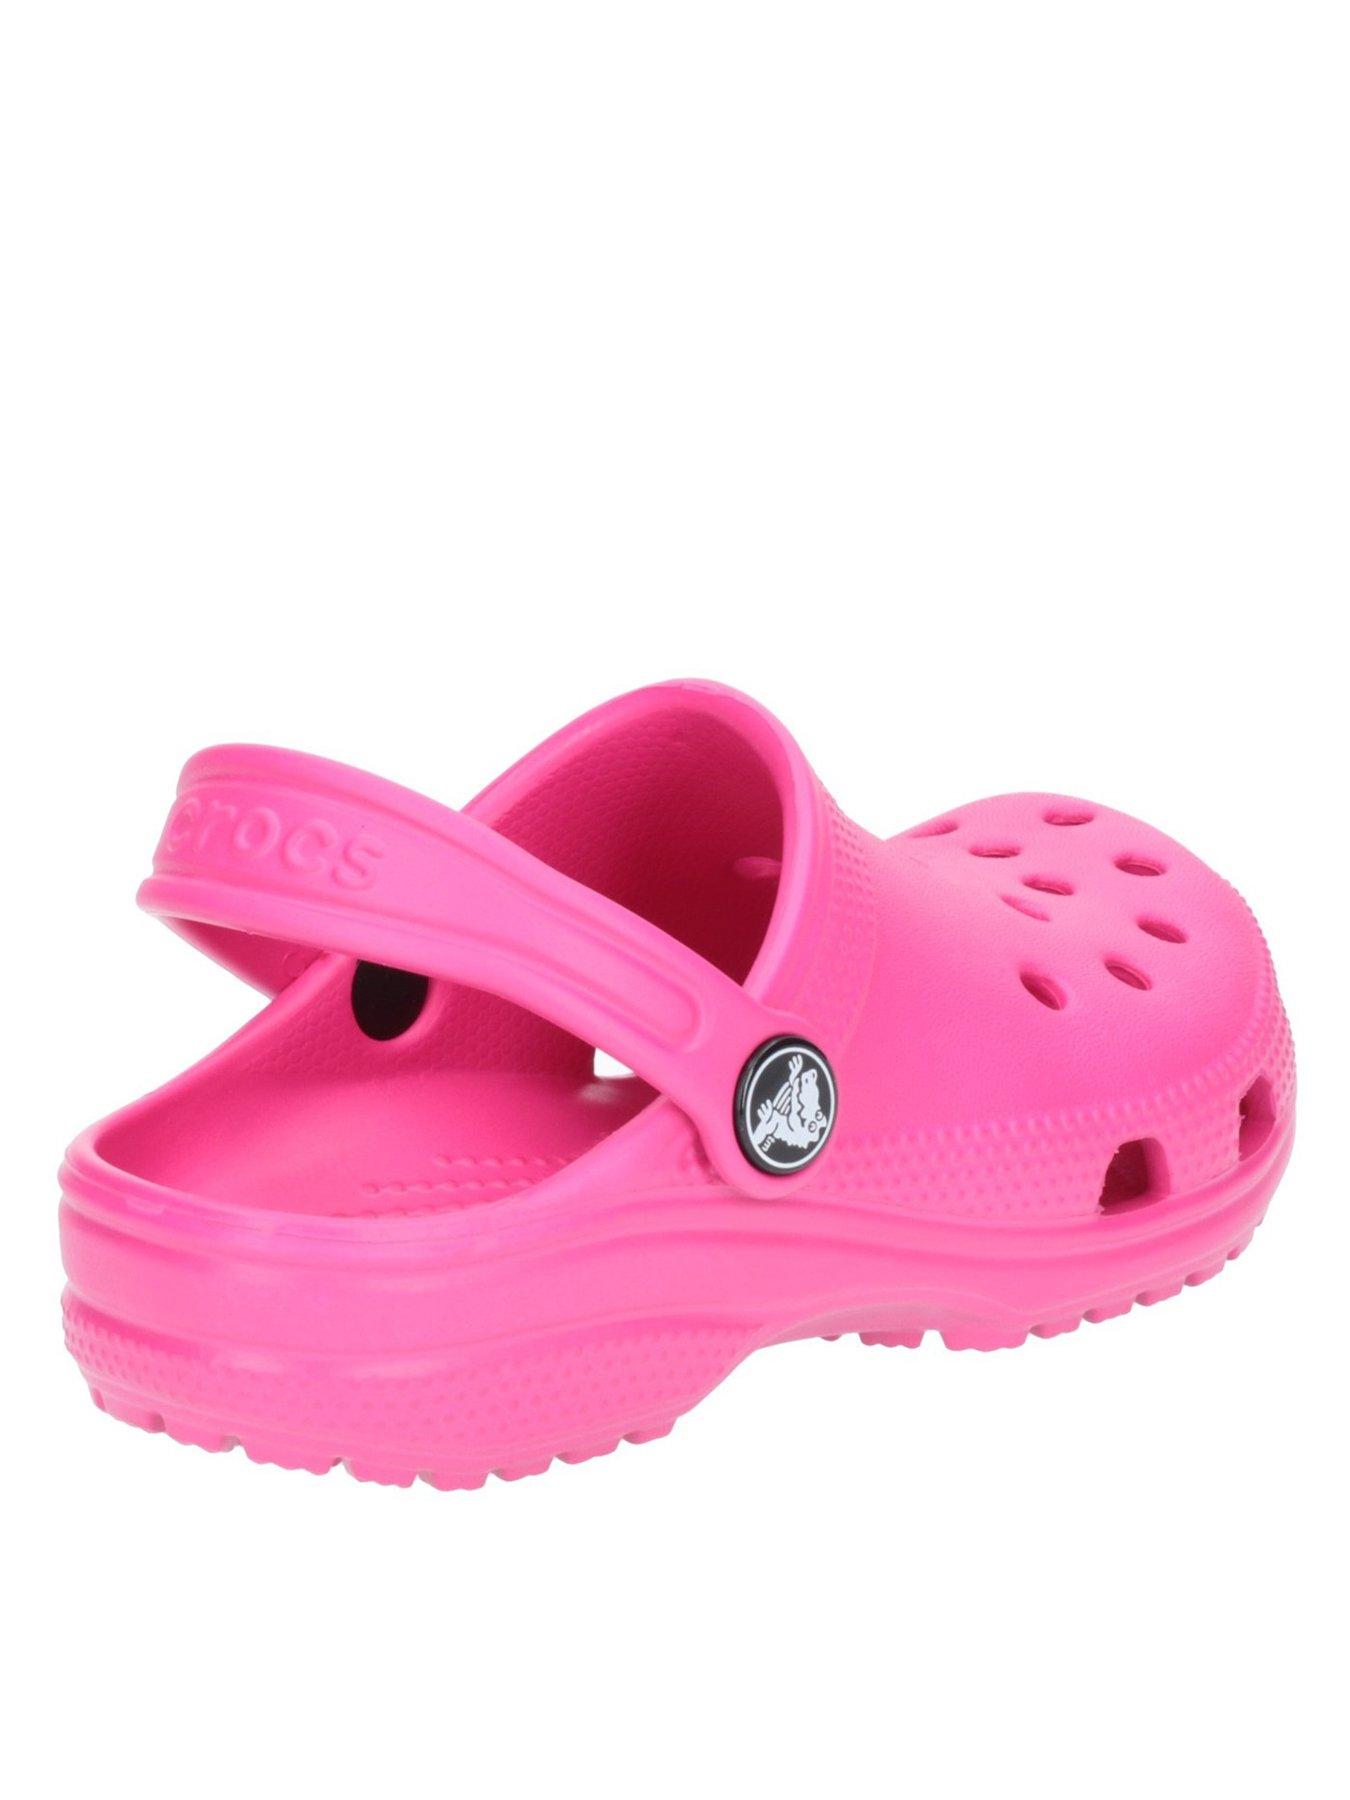 pink crocs size 11